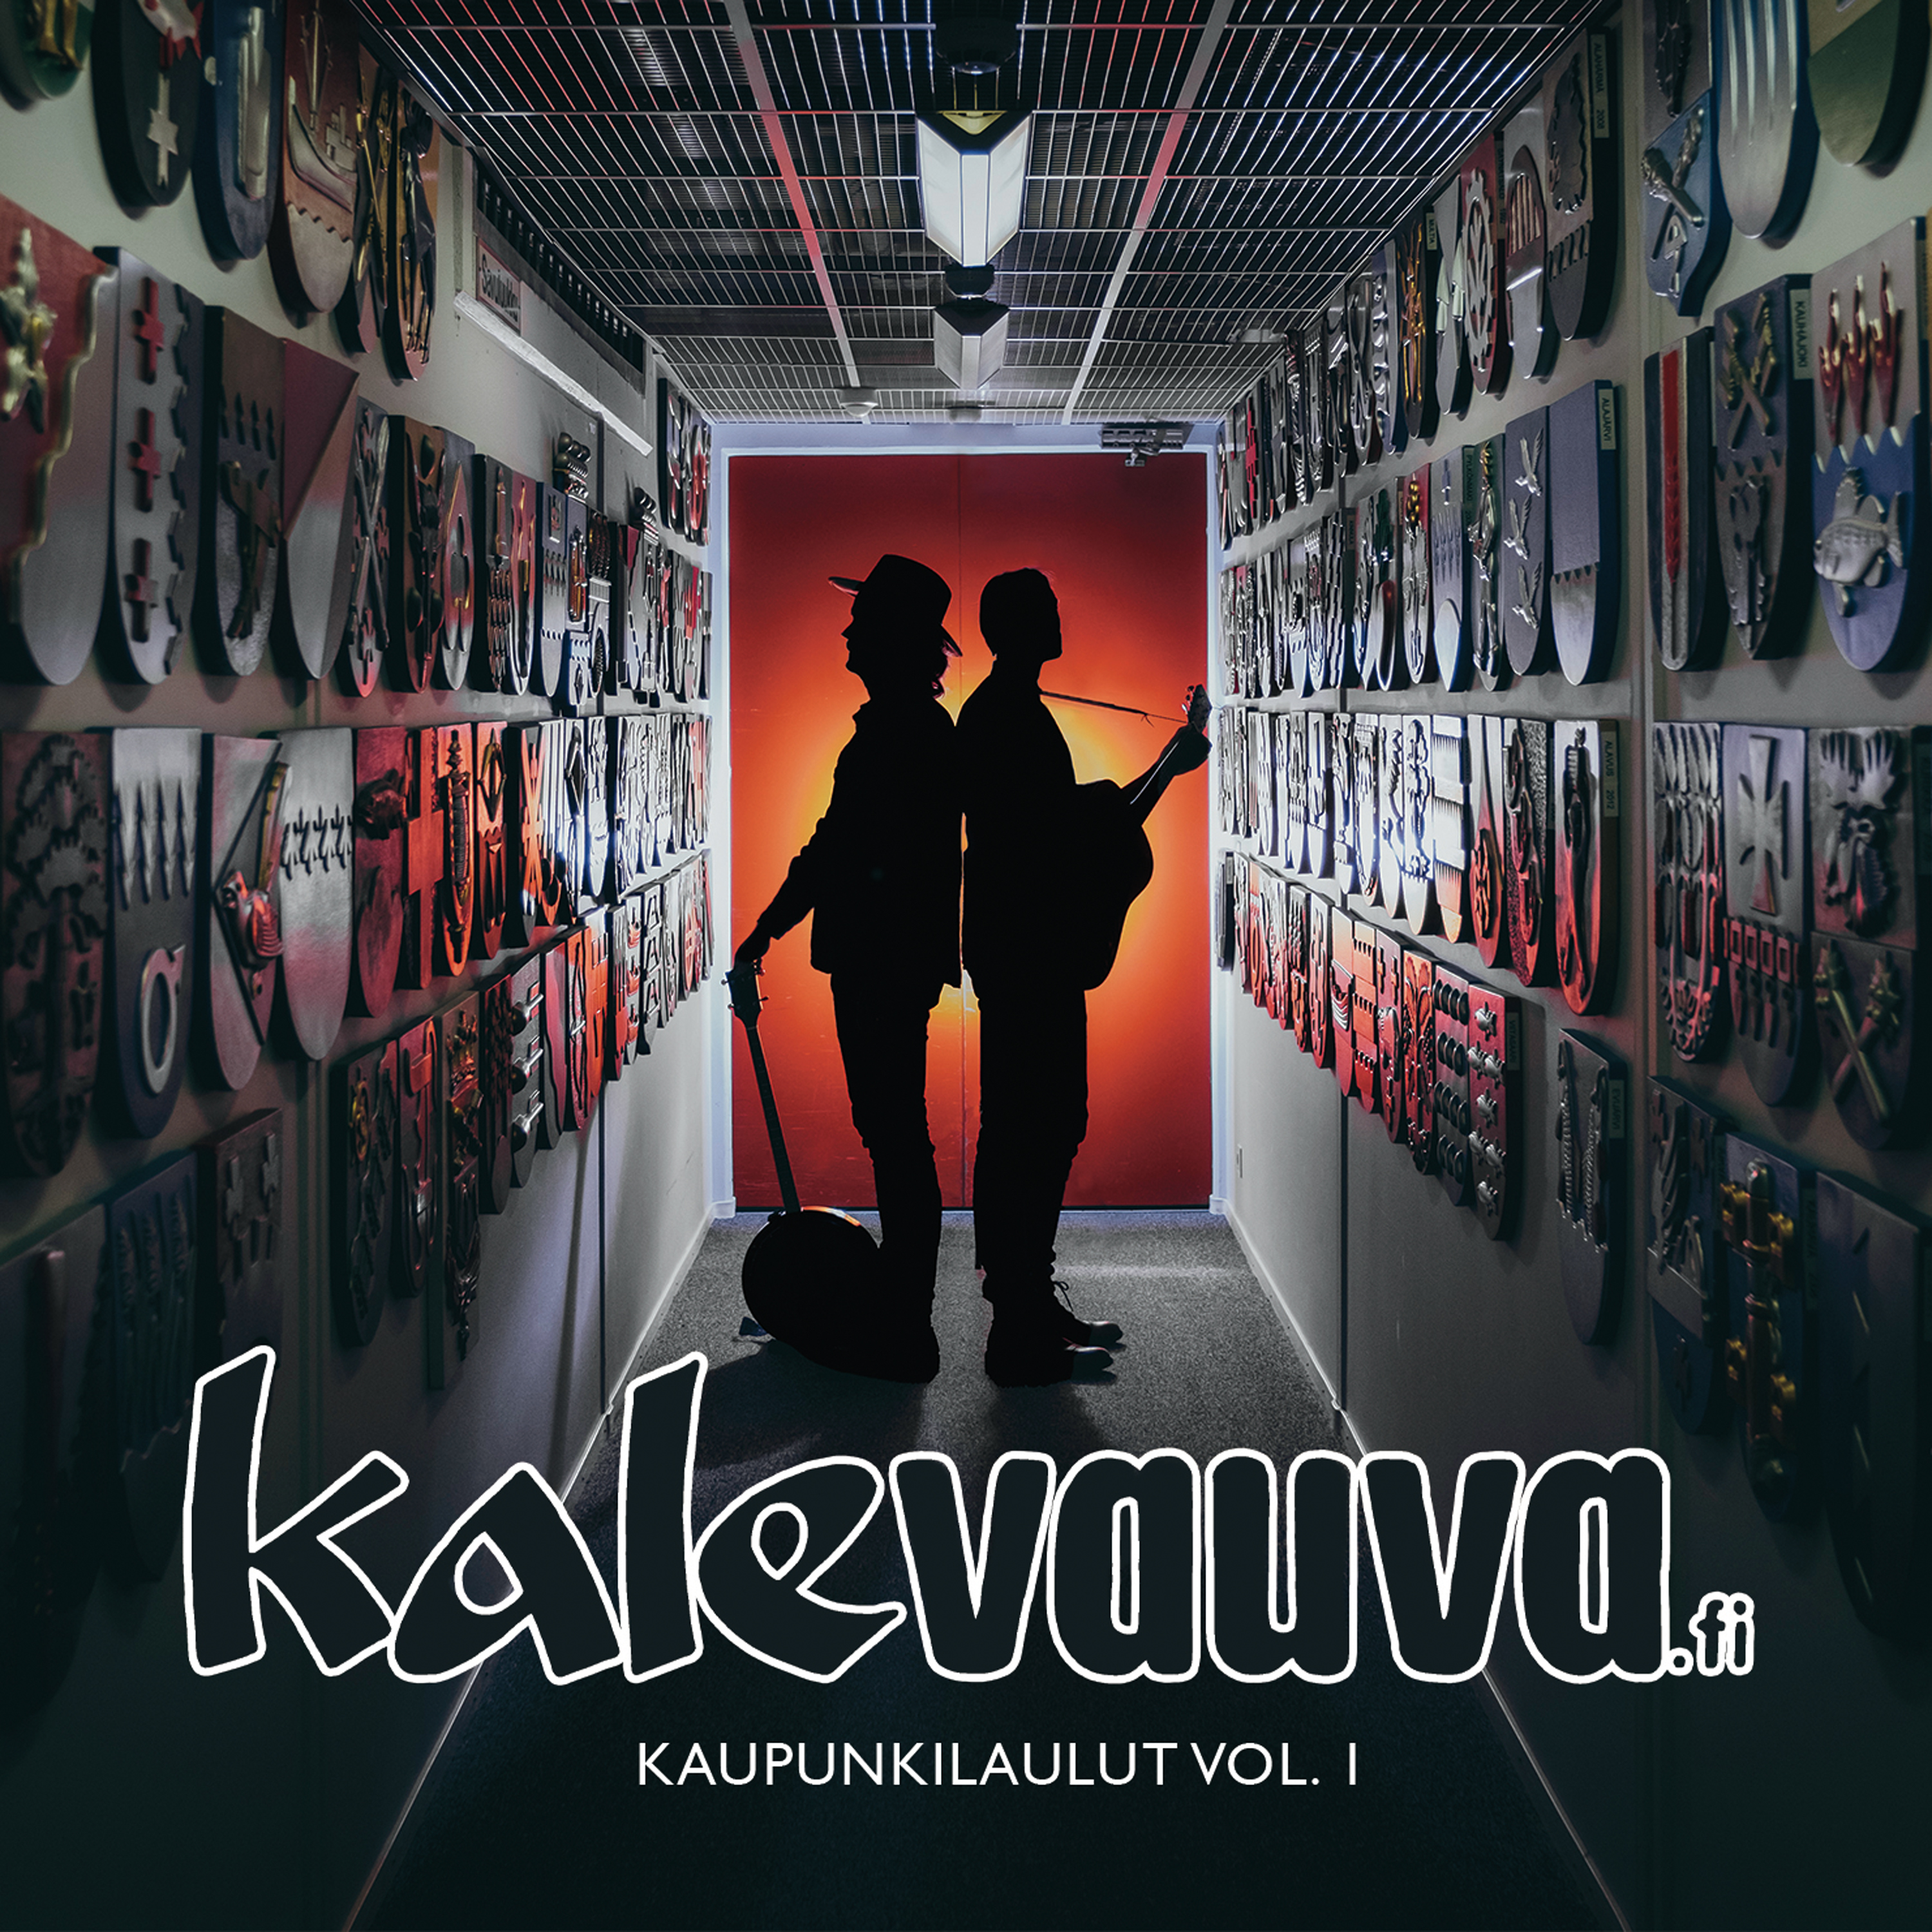 Kalevauva.fi - Kaupunkilaulut vol.1 - CD